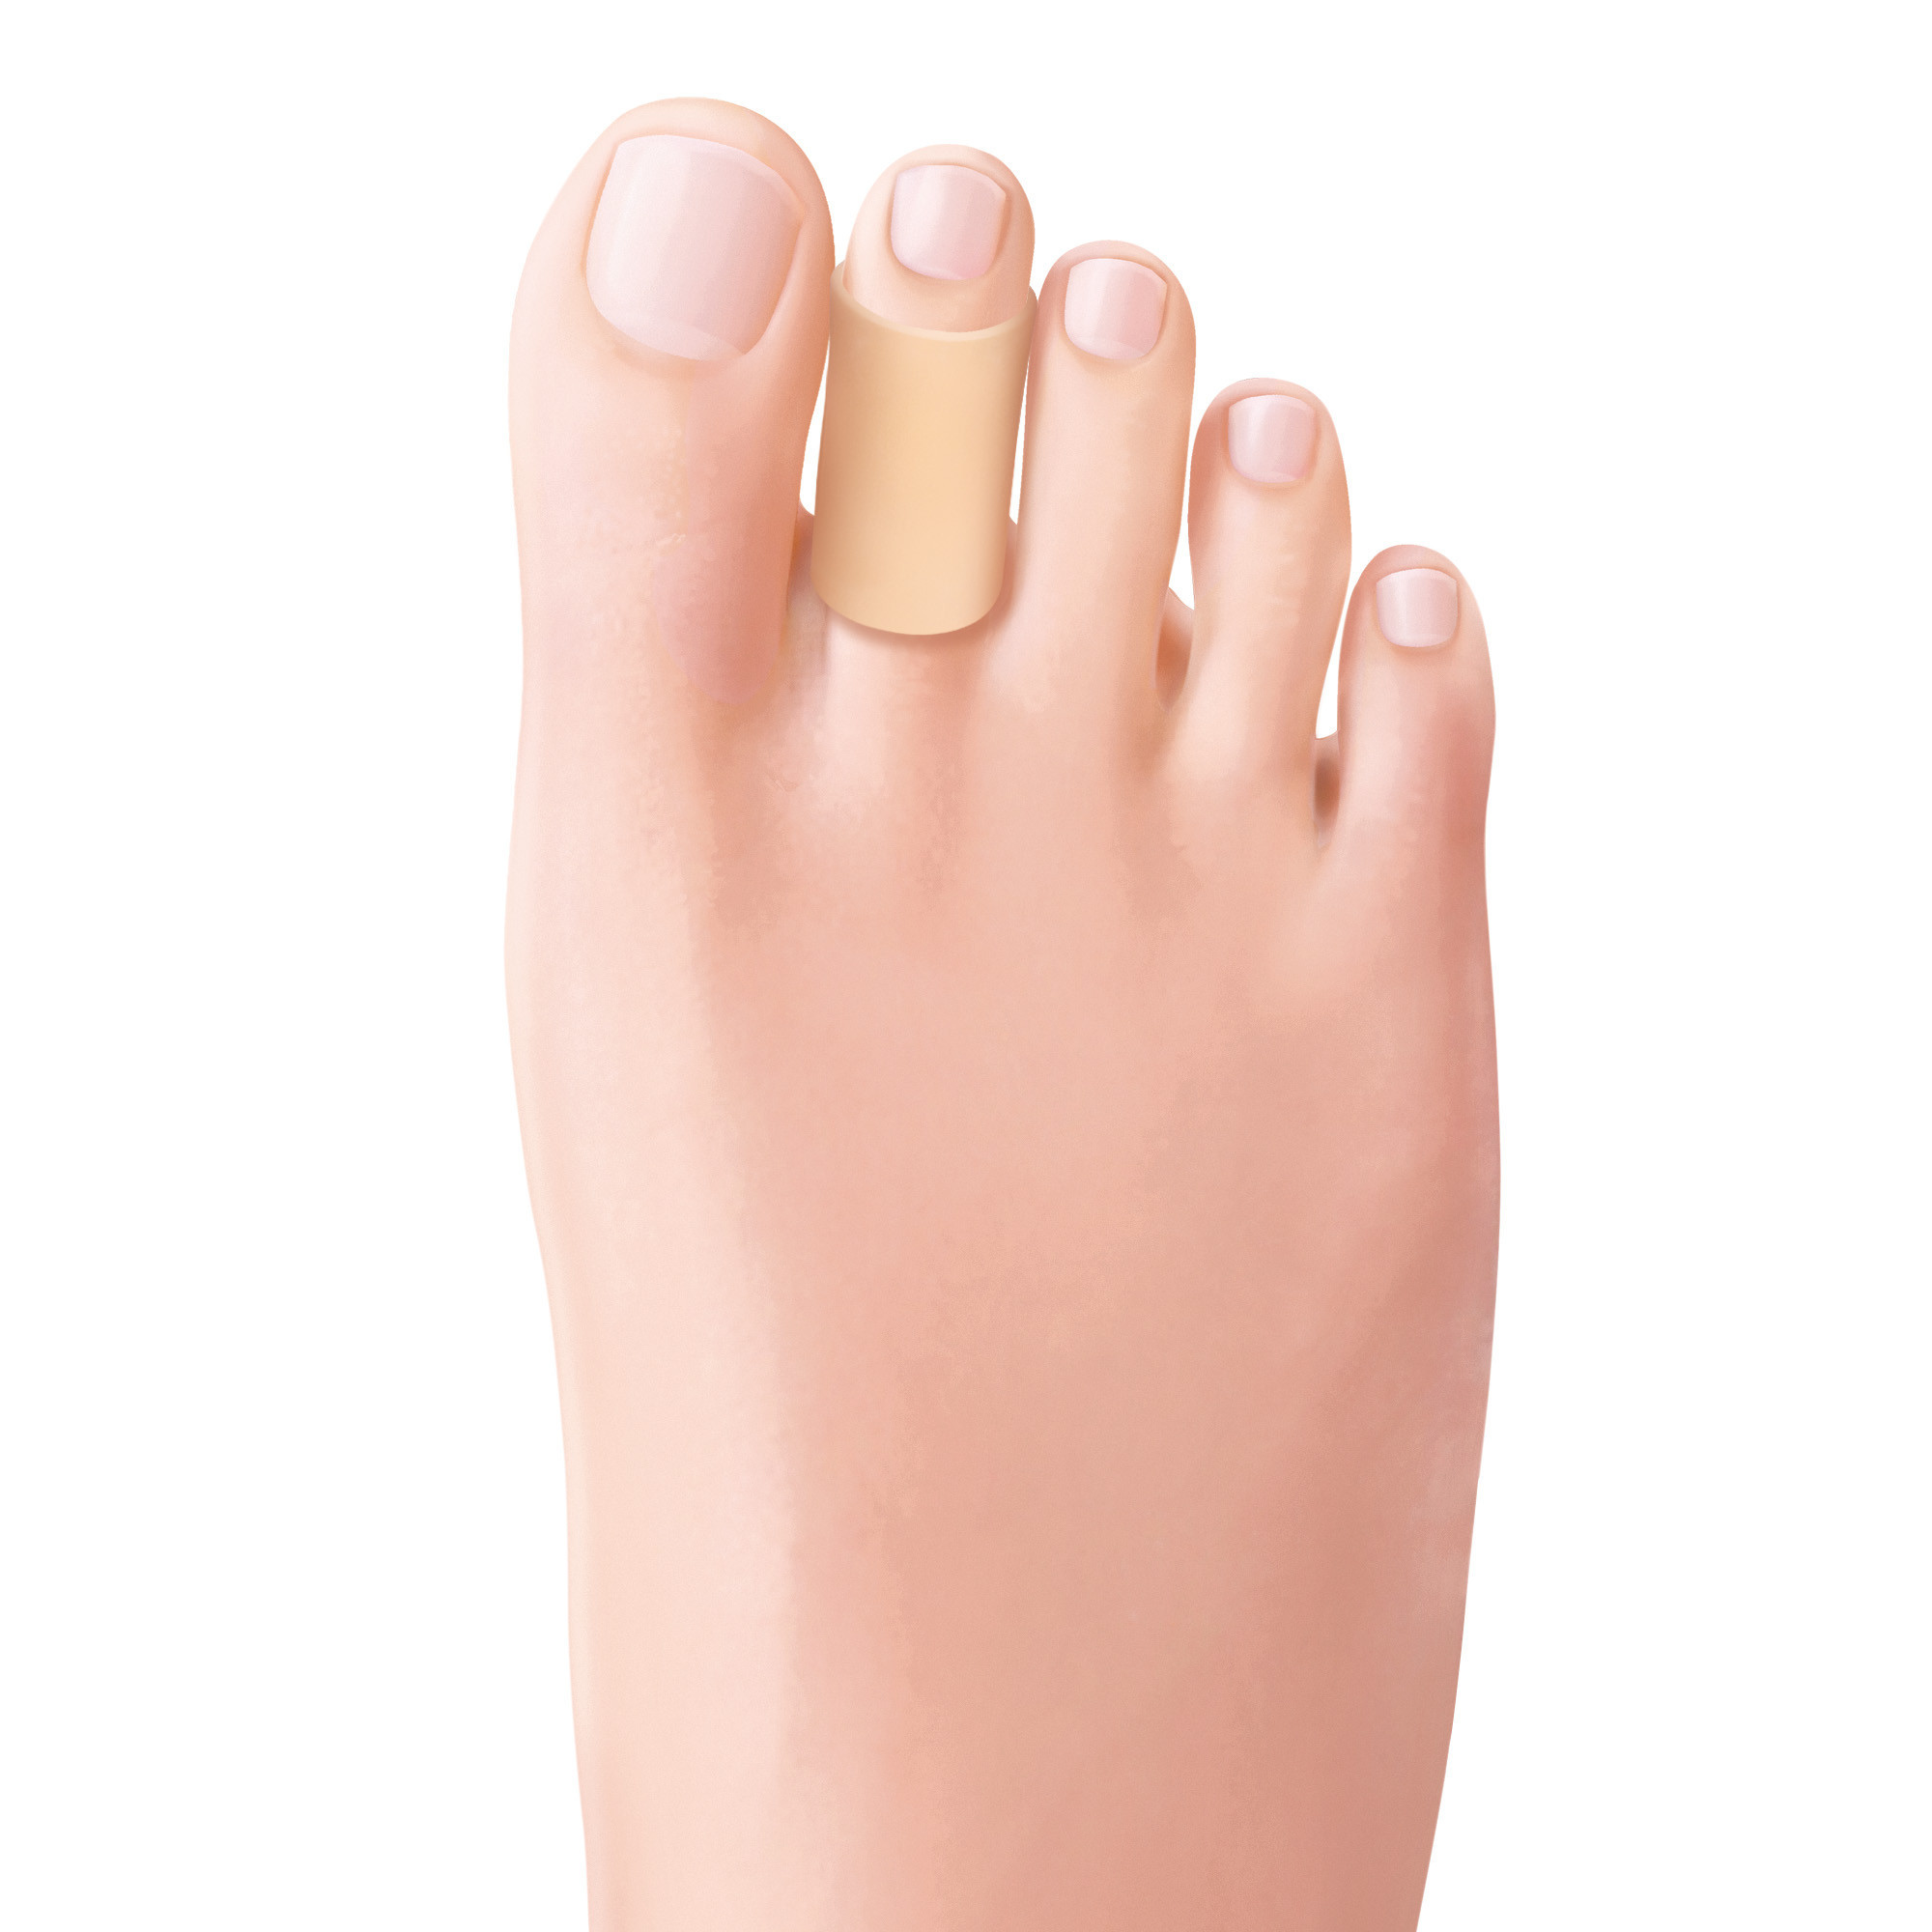 Tecniwork Polymer Gel tubular toe band Bio-Skin 1 pc